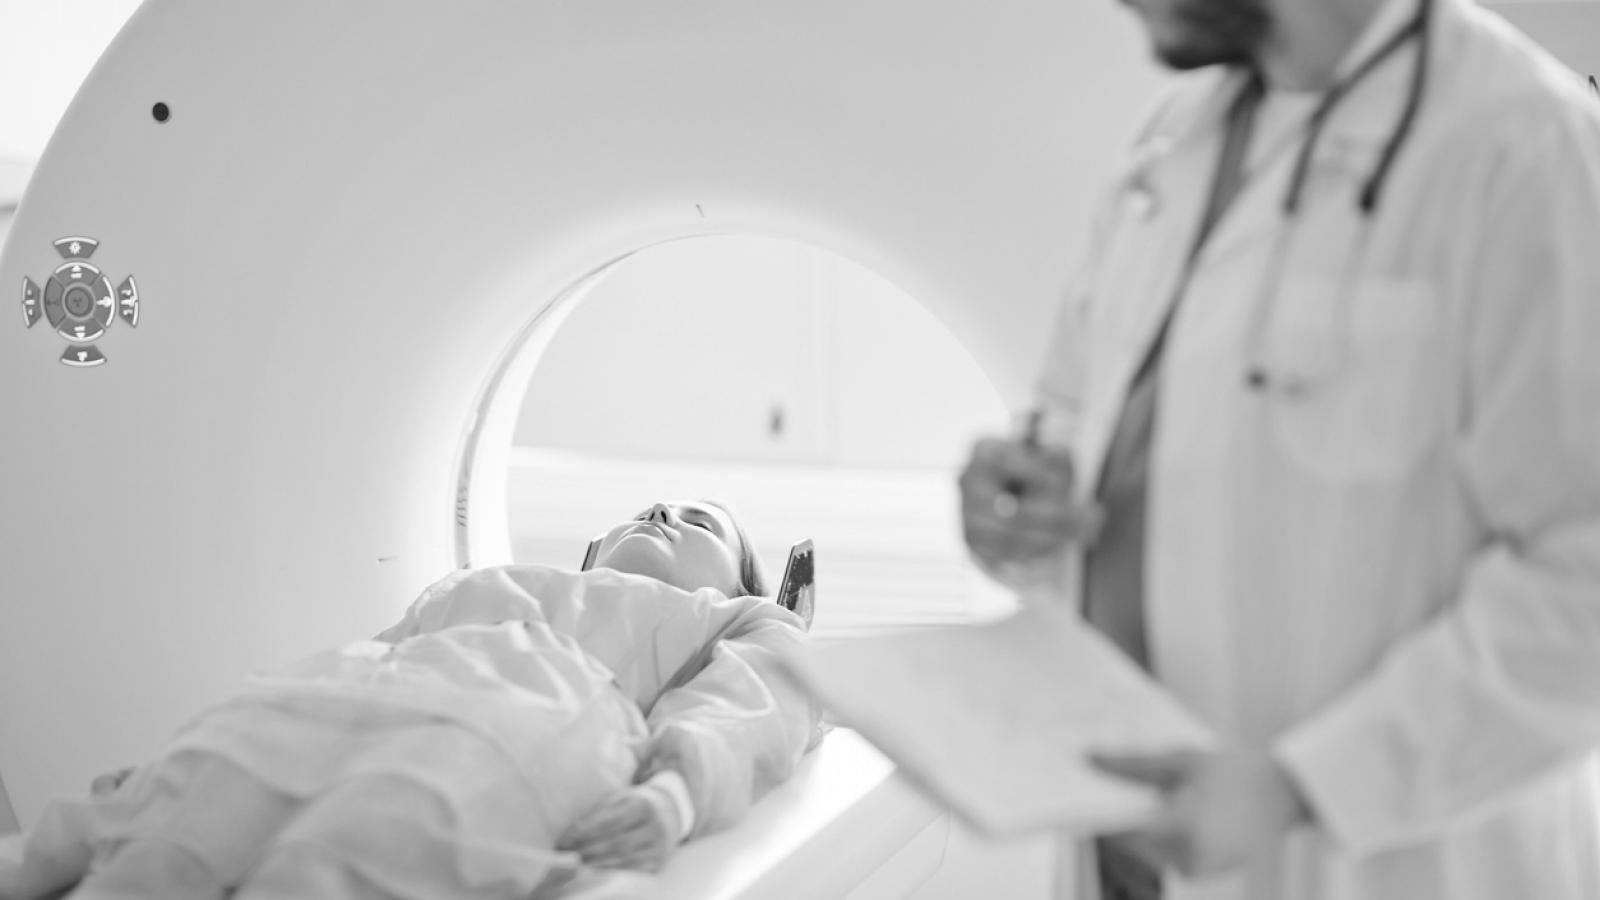 woman having MRI scan